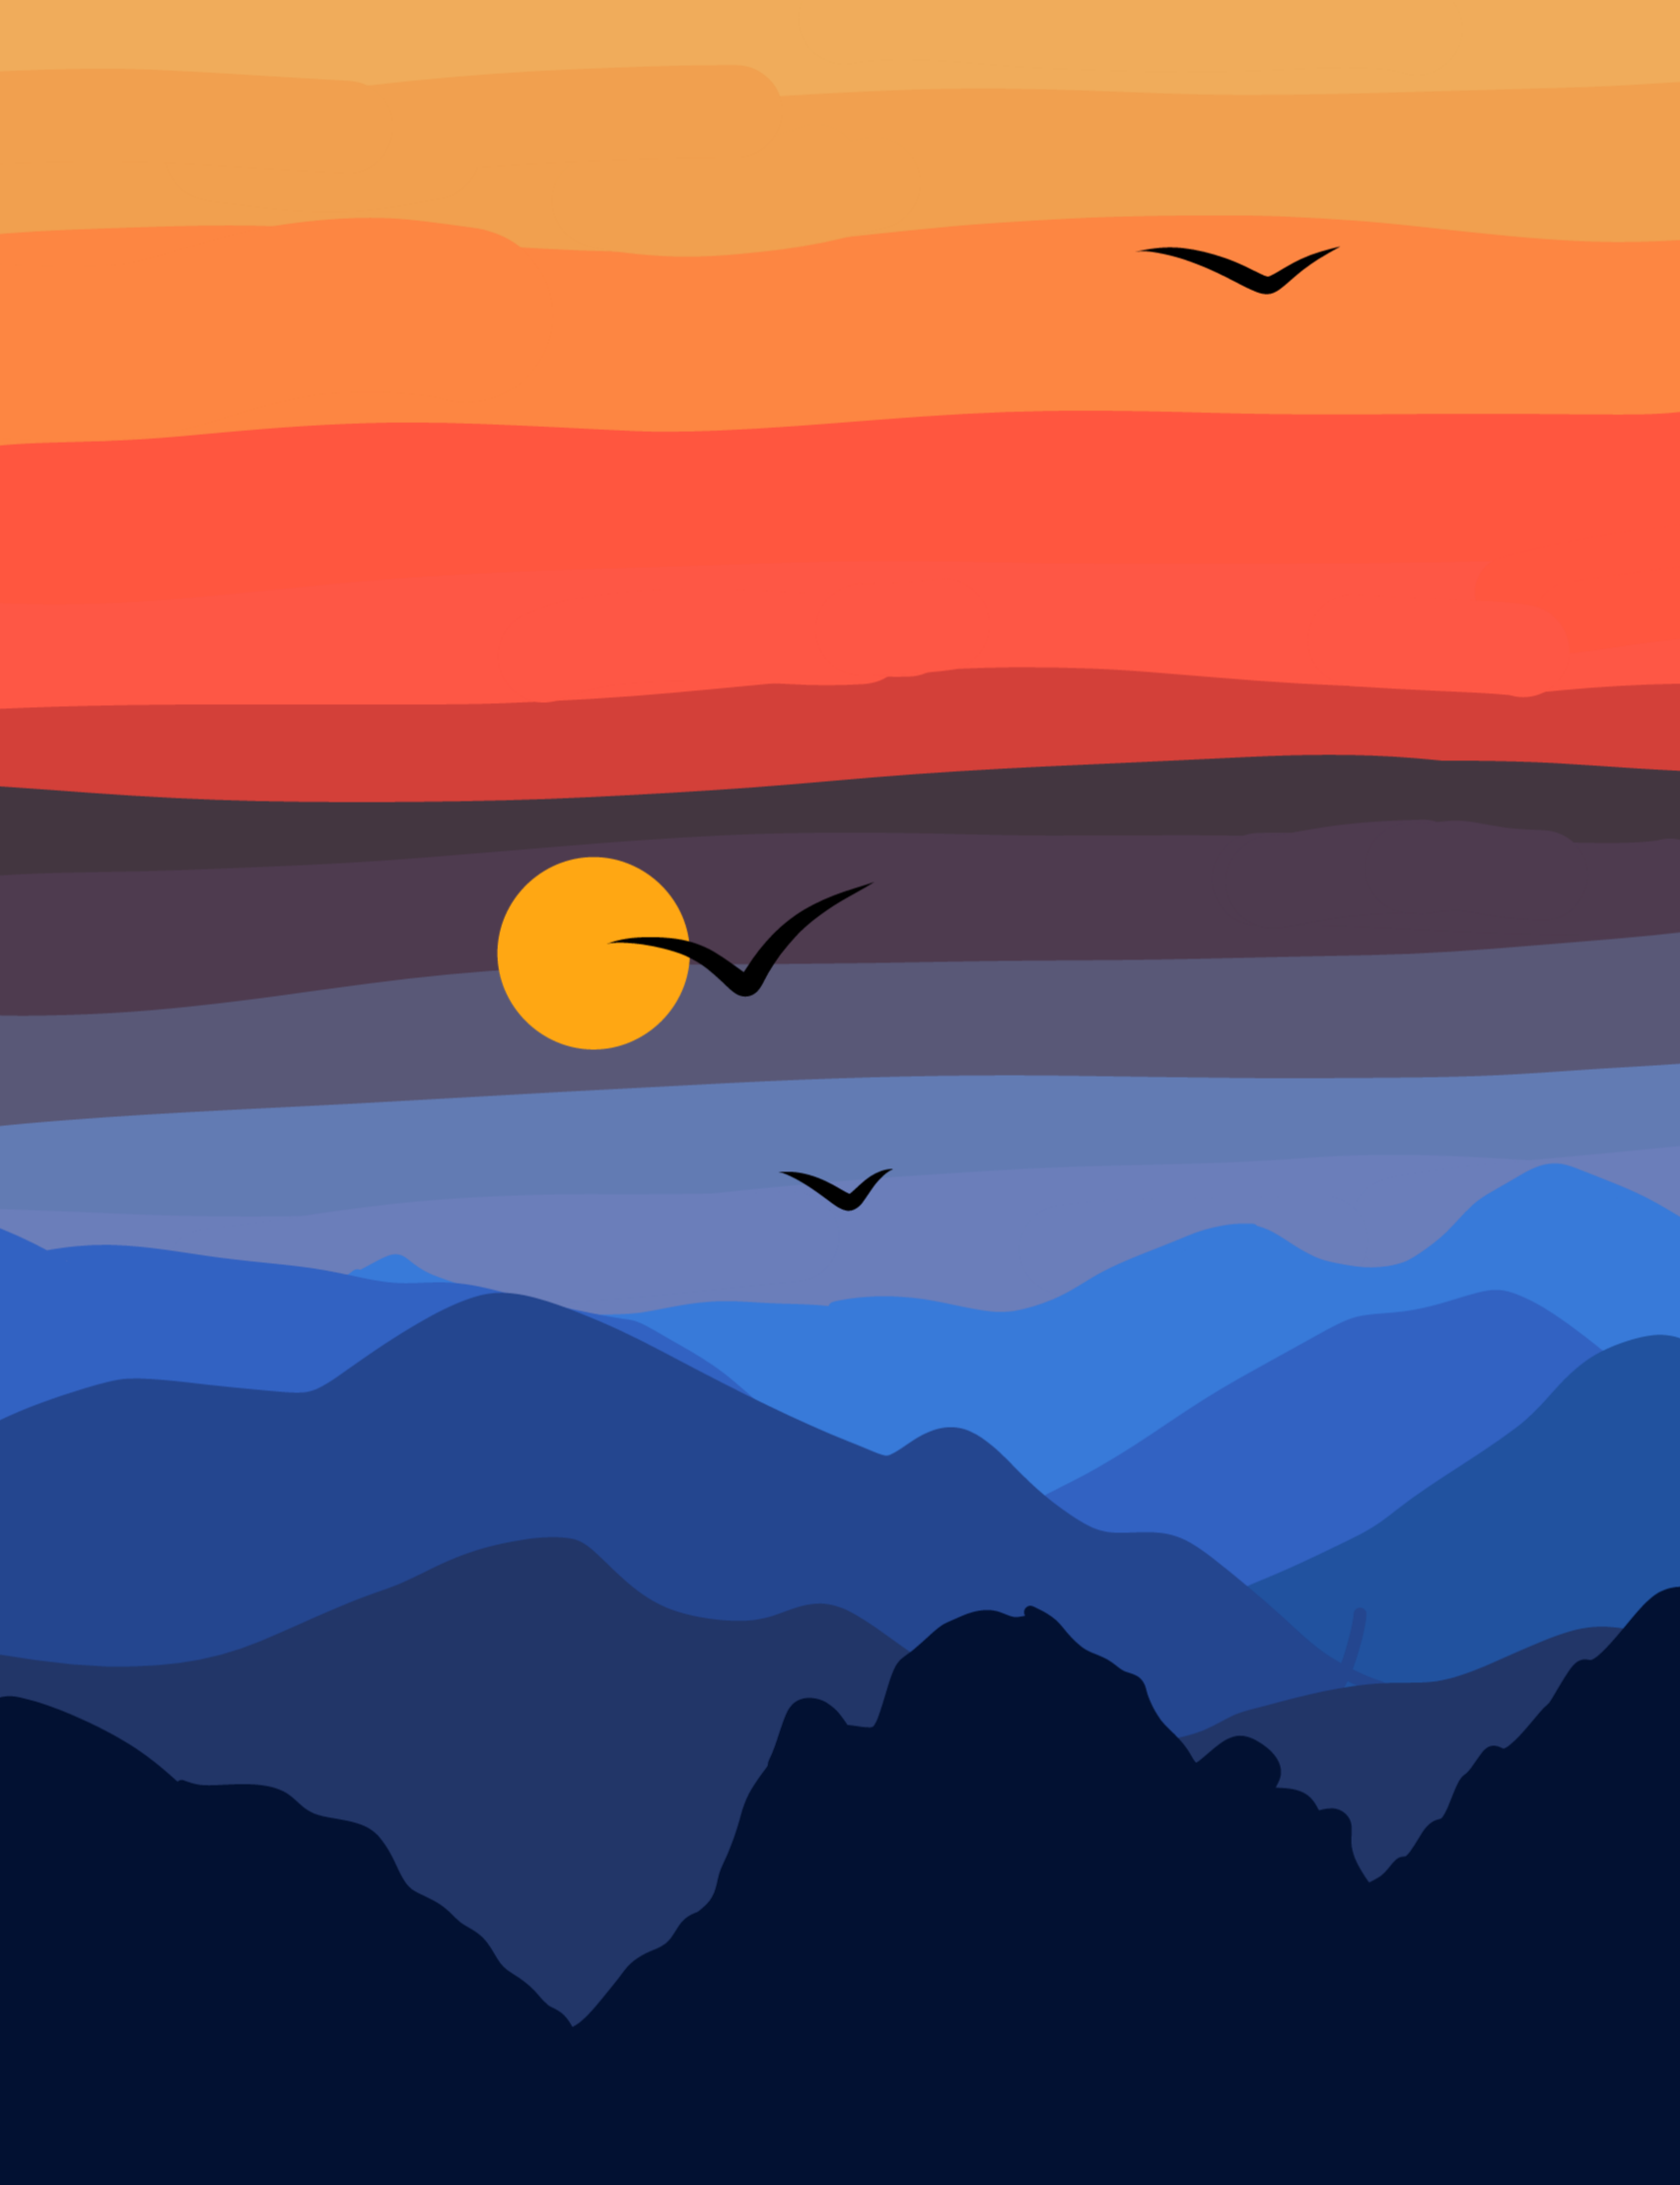 Sunset illustration